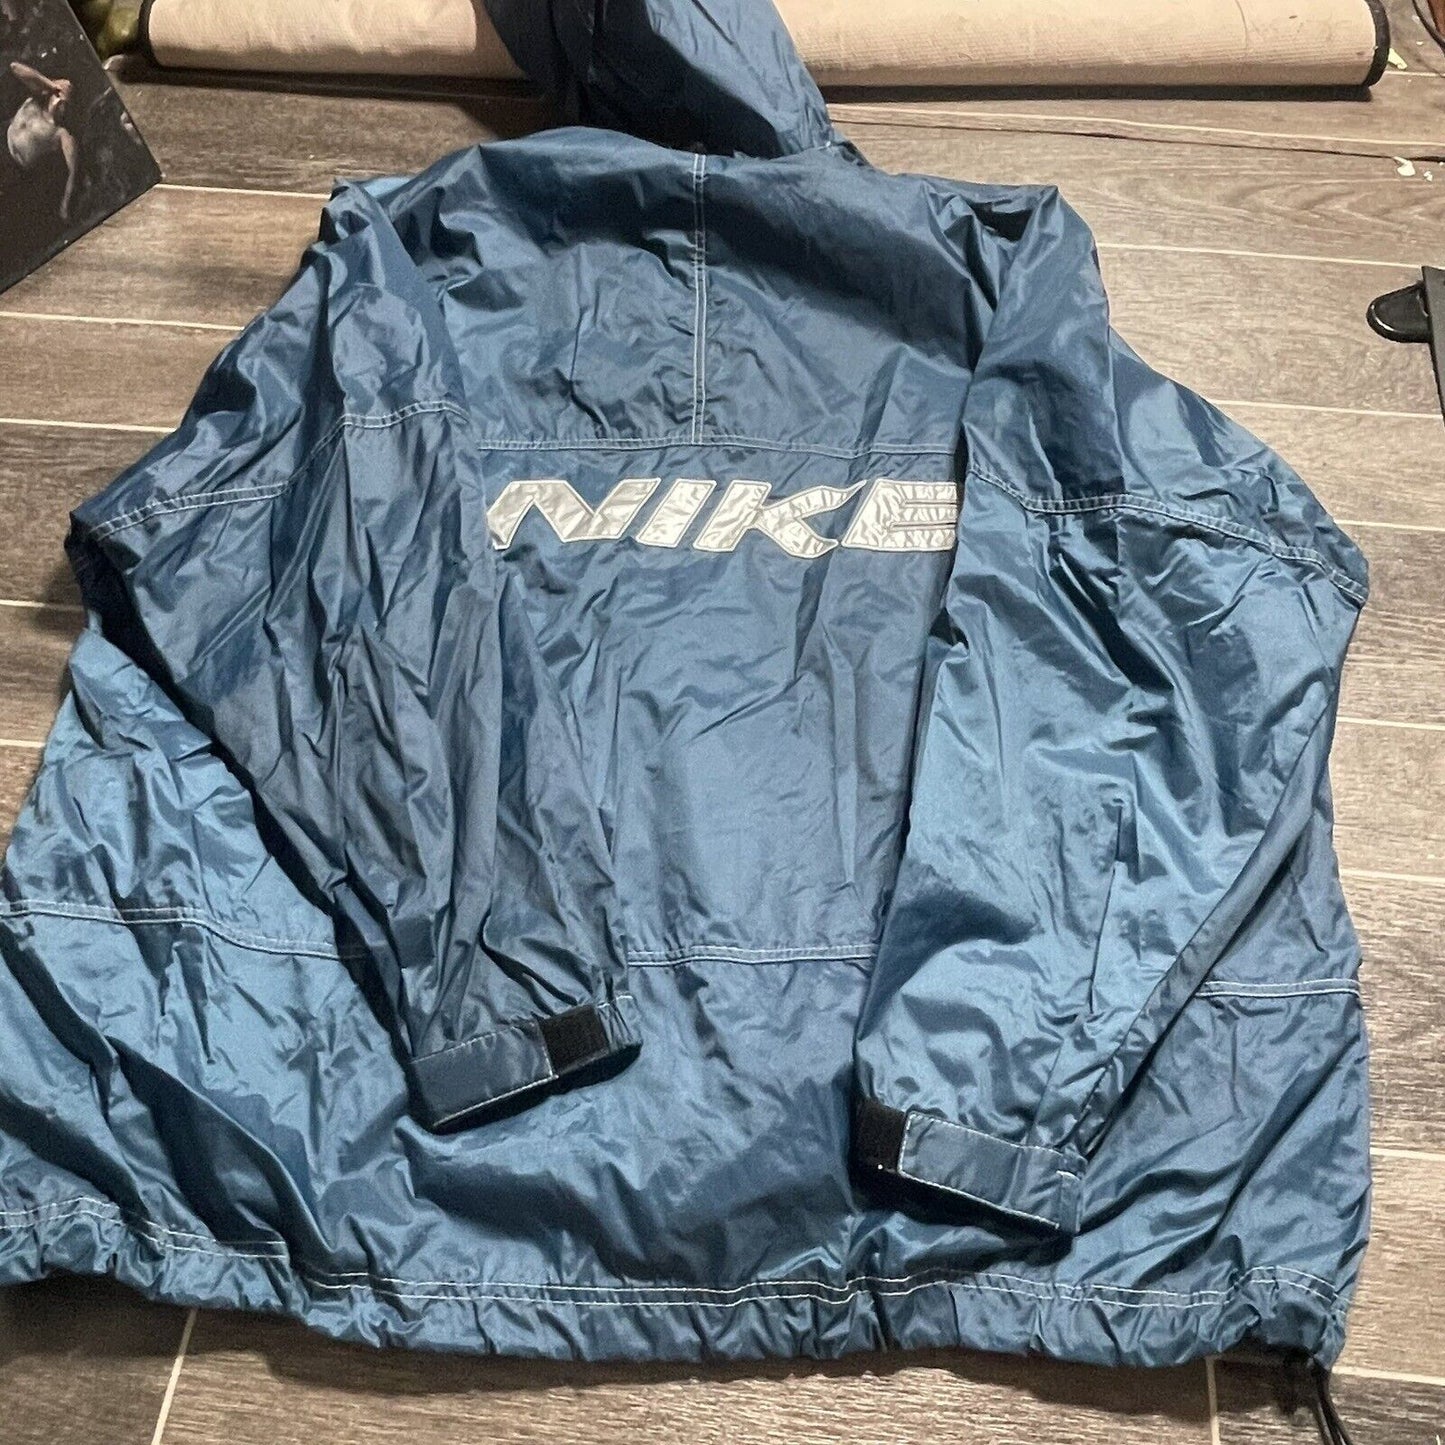 Vintage Nike Pullover Jacket Size Xxl